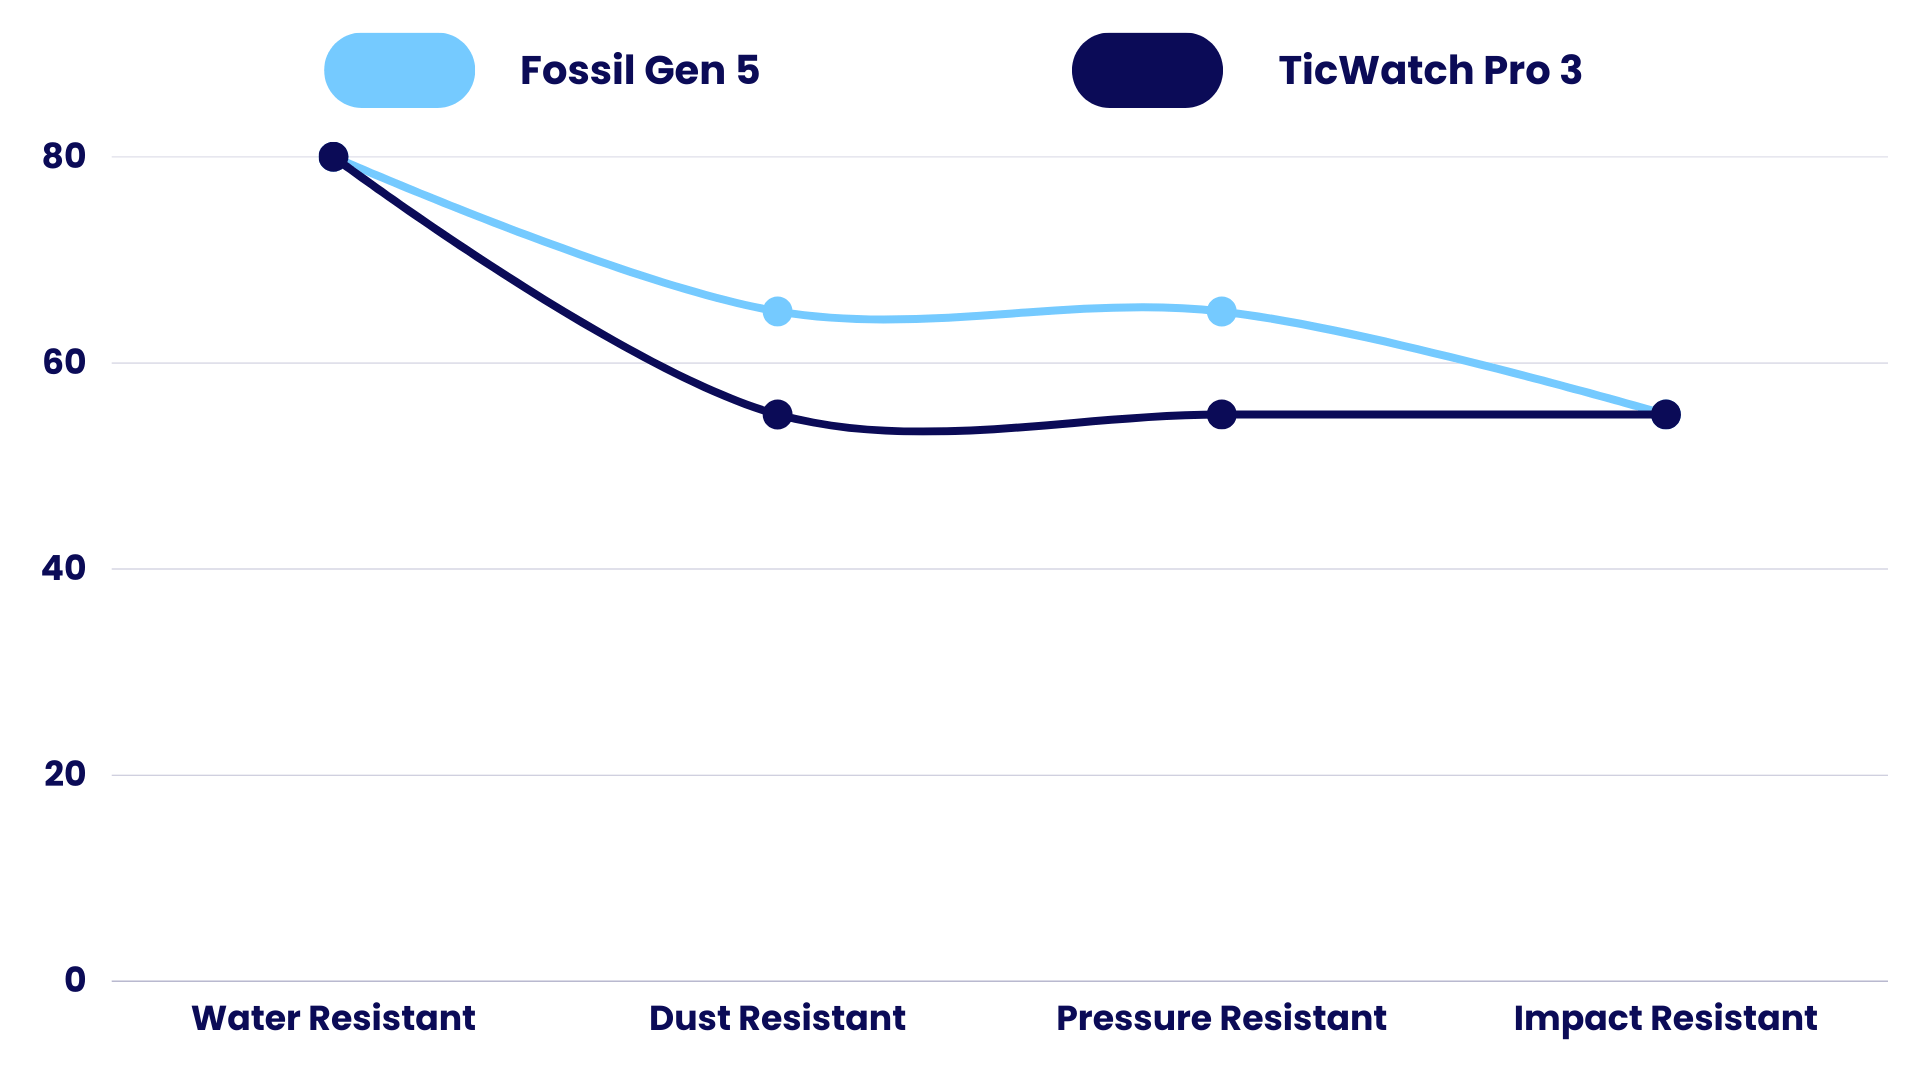 Resistivity Comparison of Fossil Gen 5 vs TicWatch Pro 3